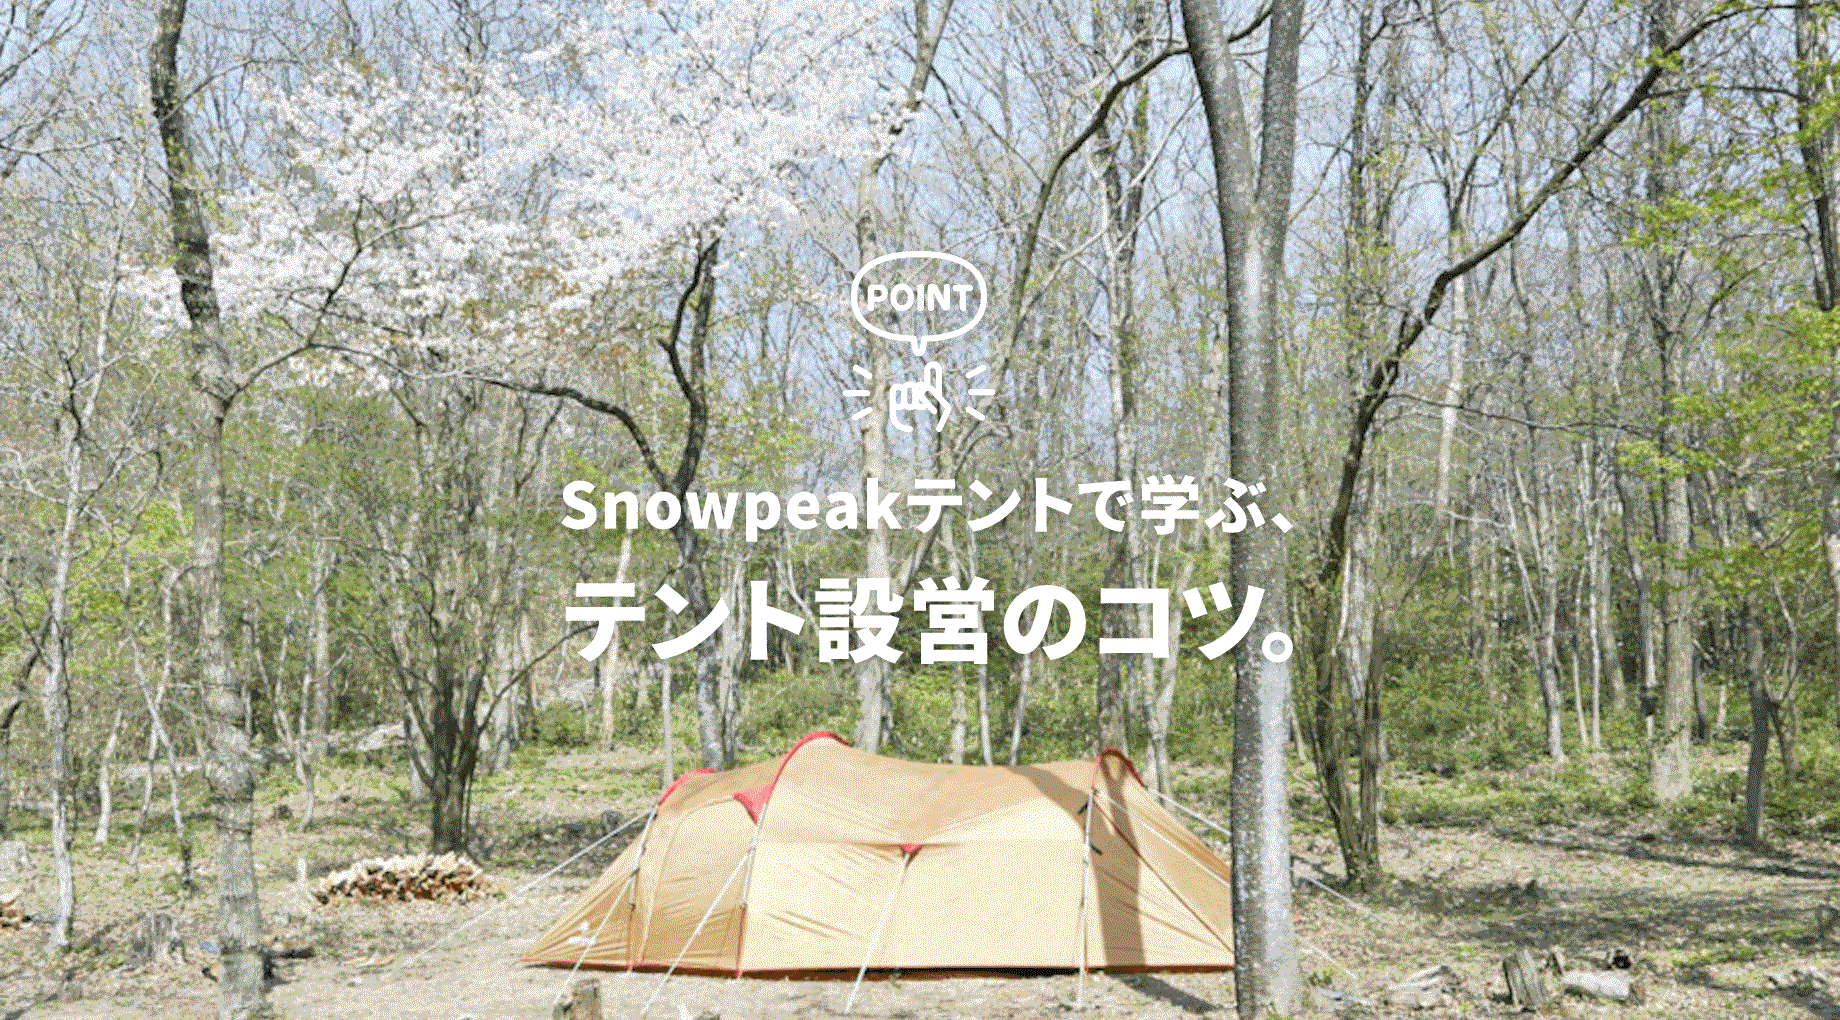 Snowpeakテントで学ぶ テント設営のコツ